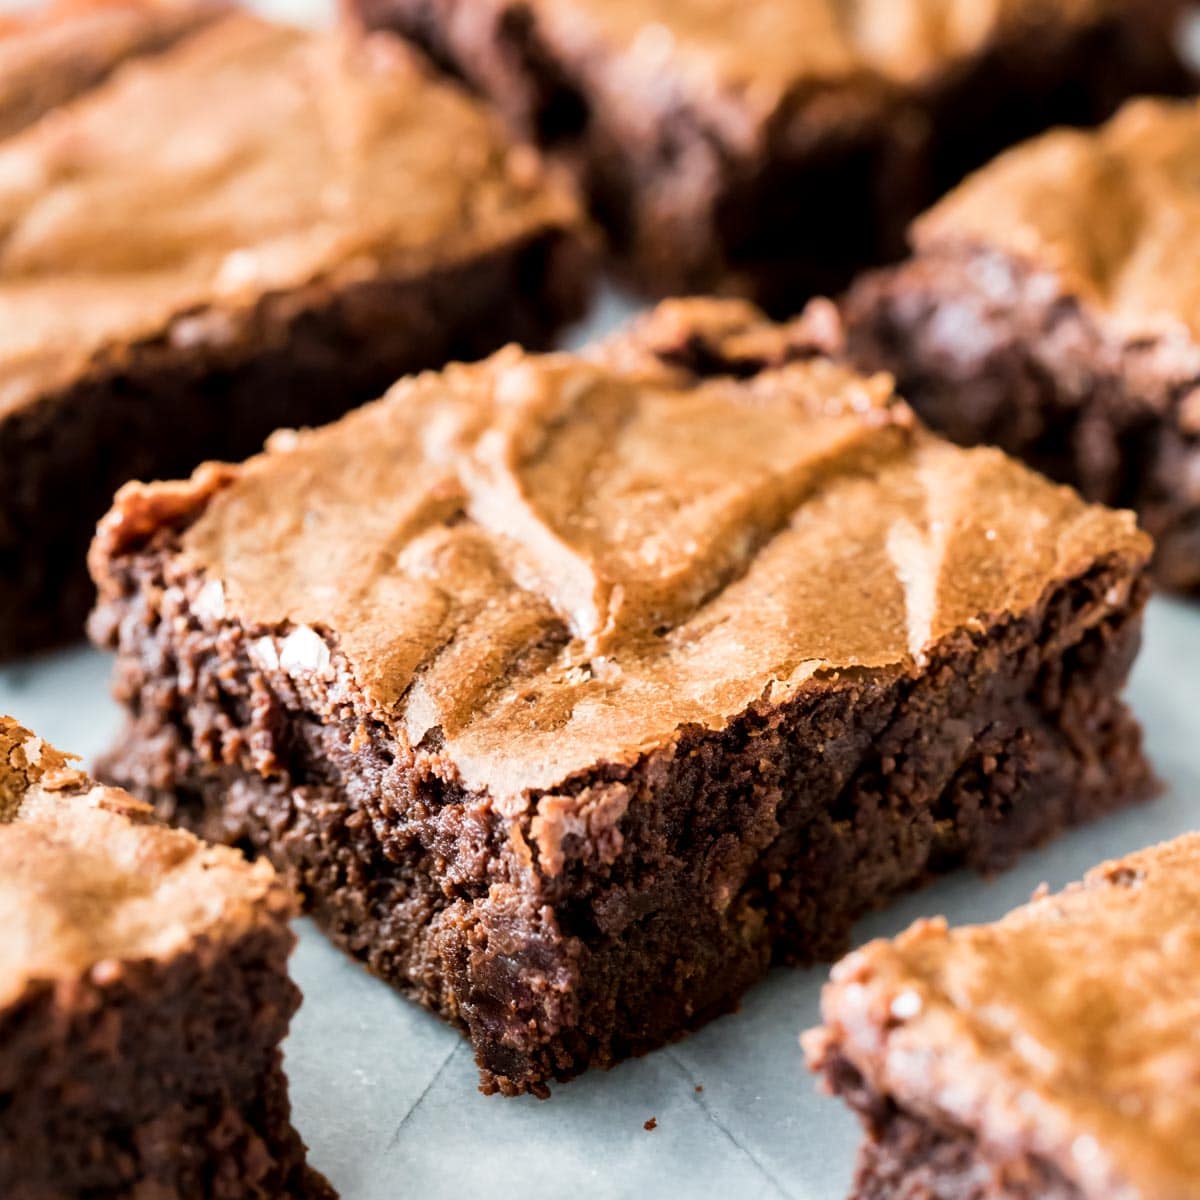 https://sugarspunrun.com/wp-content/uploads/2019/08/Homemade-brownies-from-scratch-2-of-2.jpg